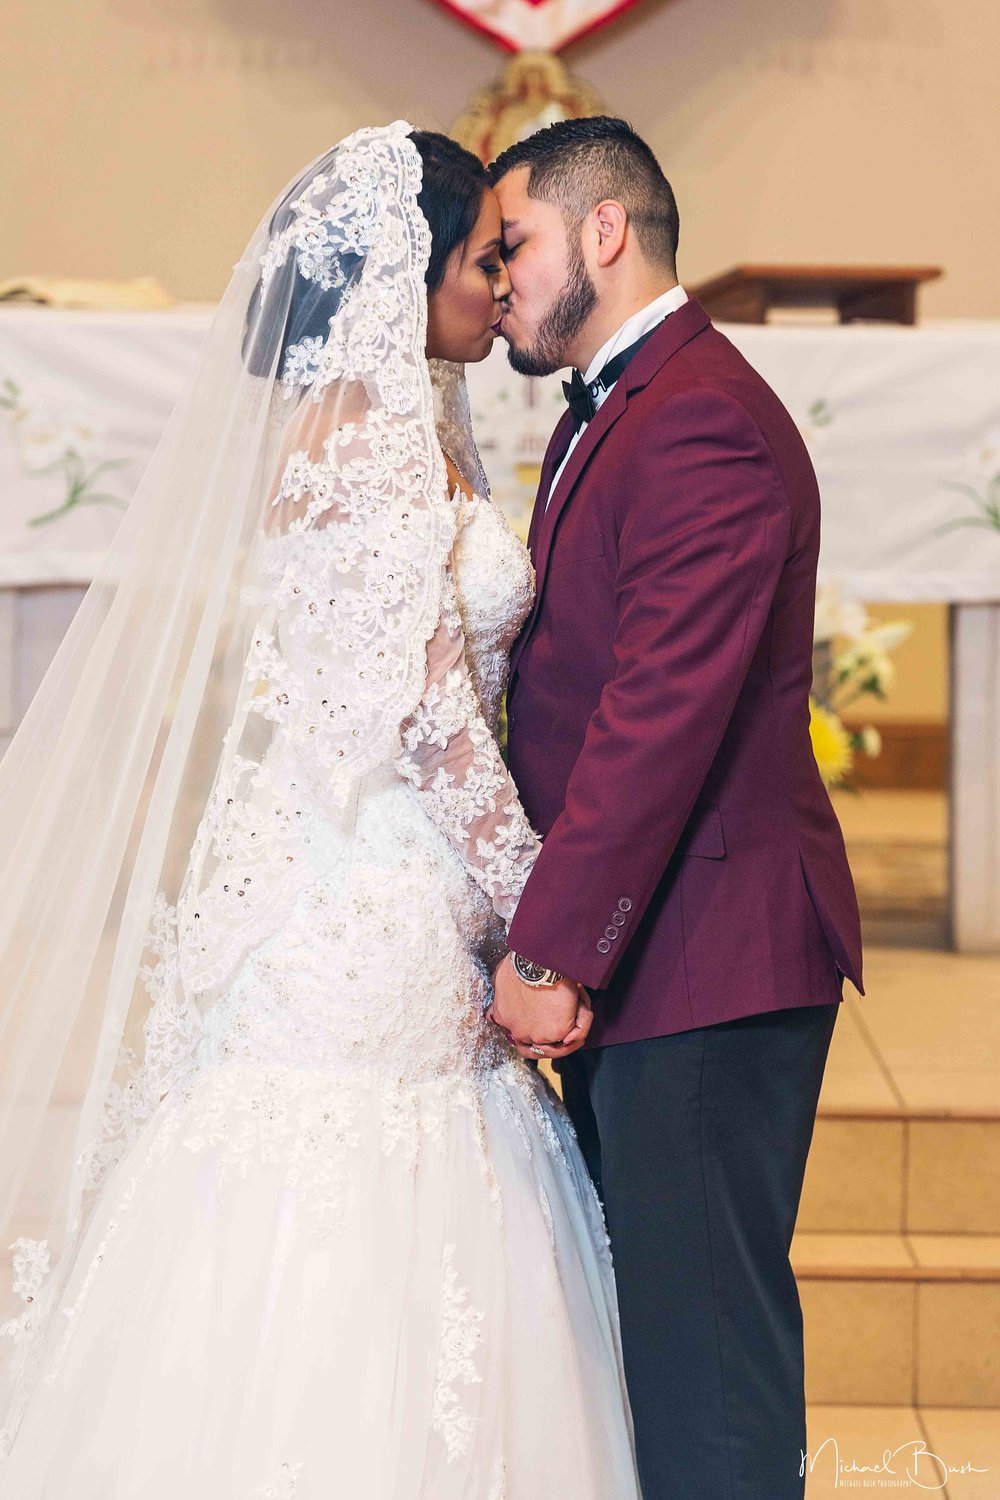 Wedding-Details-Bride-Fort Worth-colors-Ceremony-weddingceremony-brides-groom-ido-church-kiss.jpg